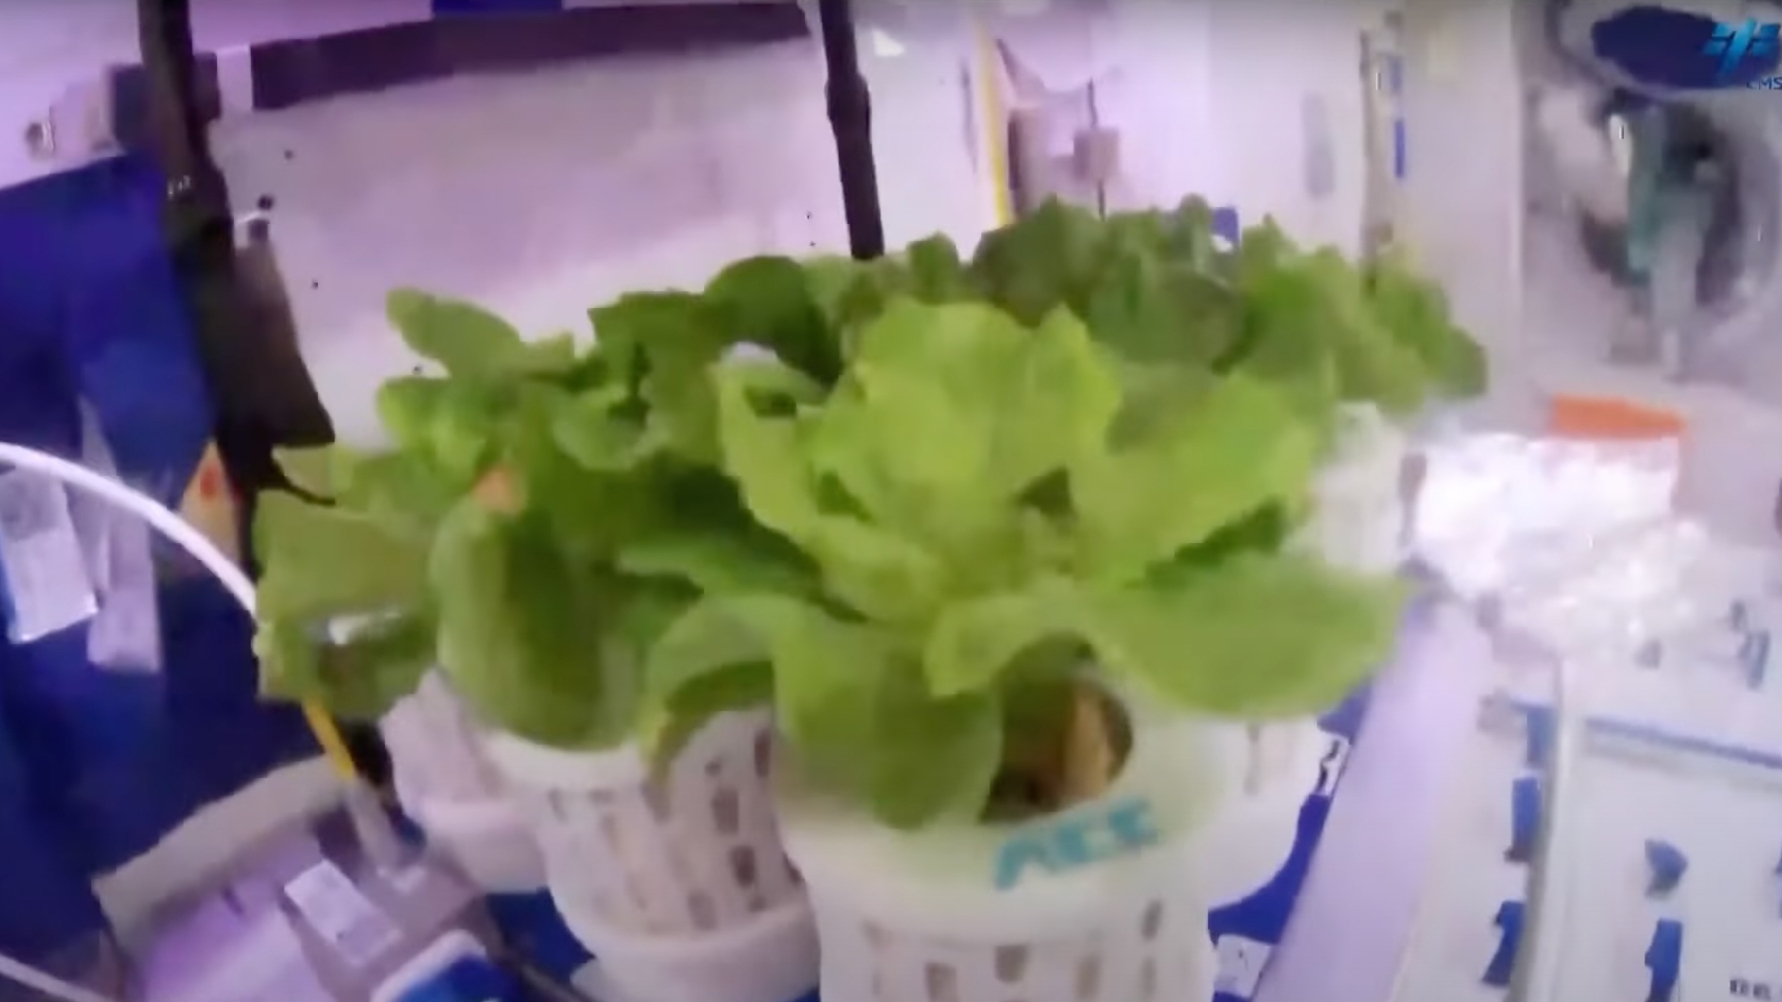  China's astronauts have been tending a 'space garden' in orbit (video) 